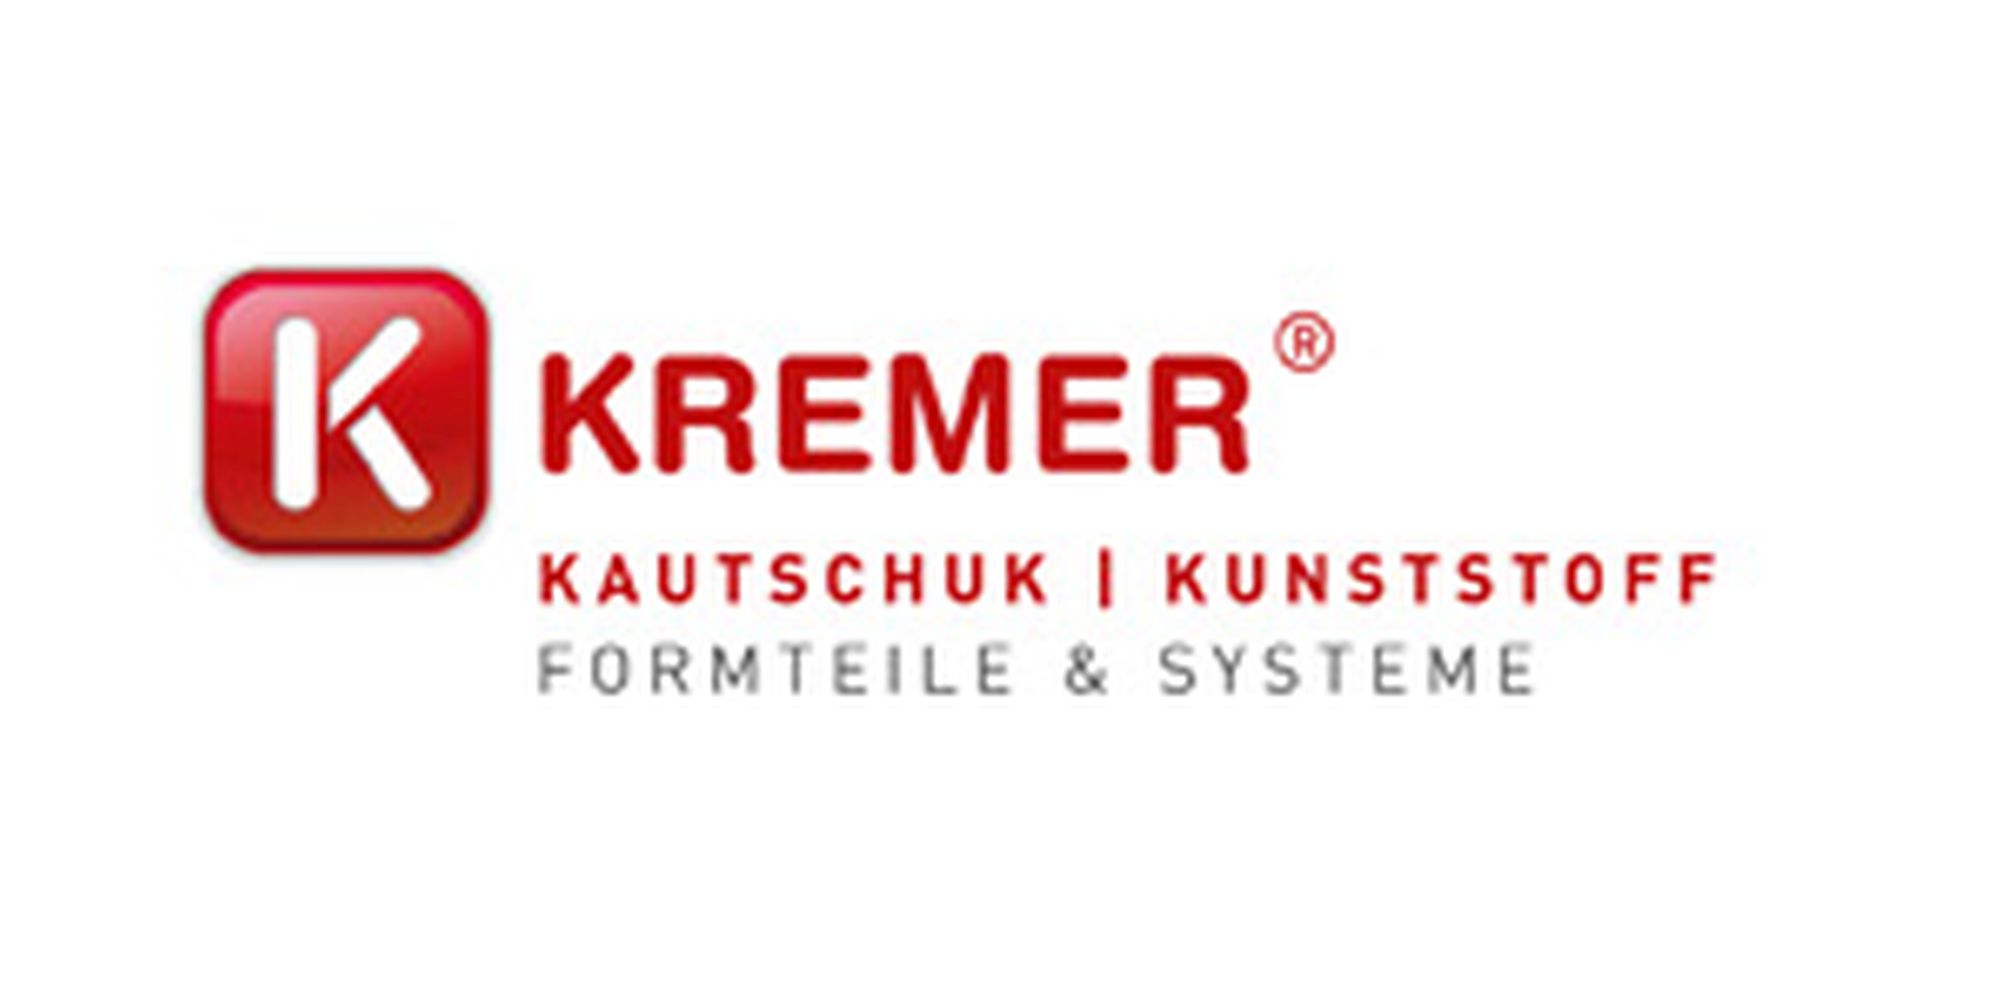 Kremer-Kautschuk-Kunststoff